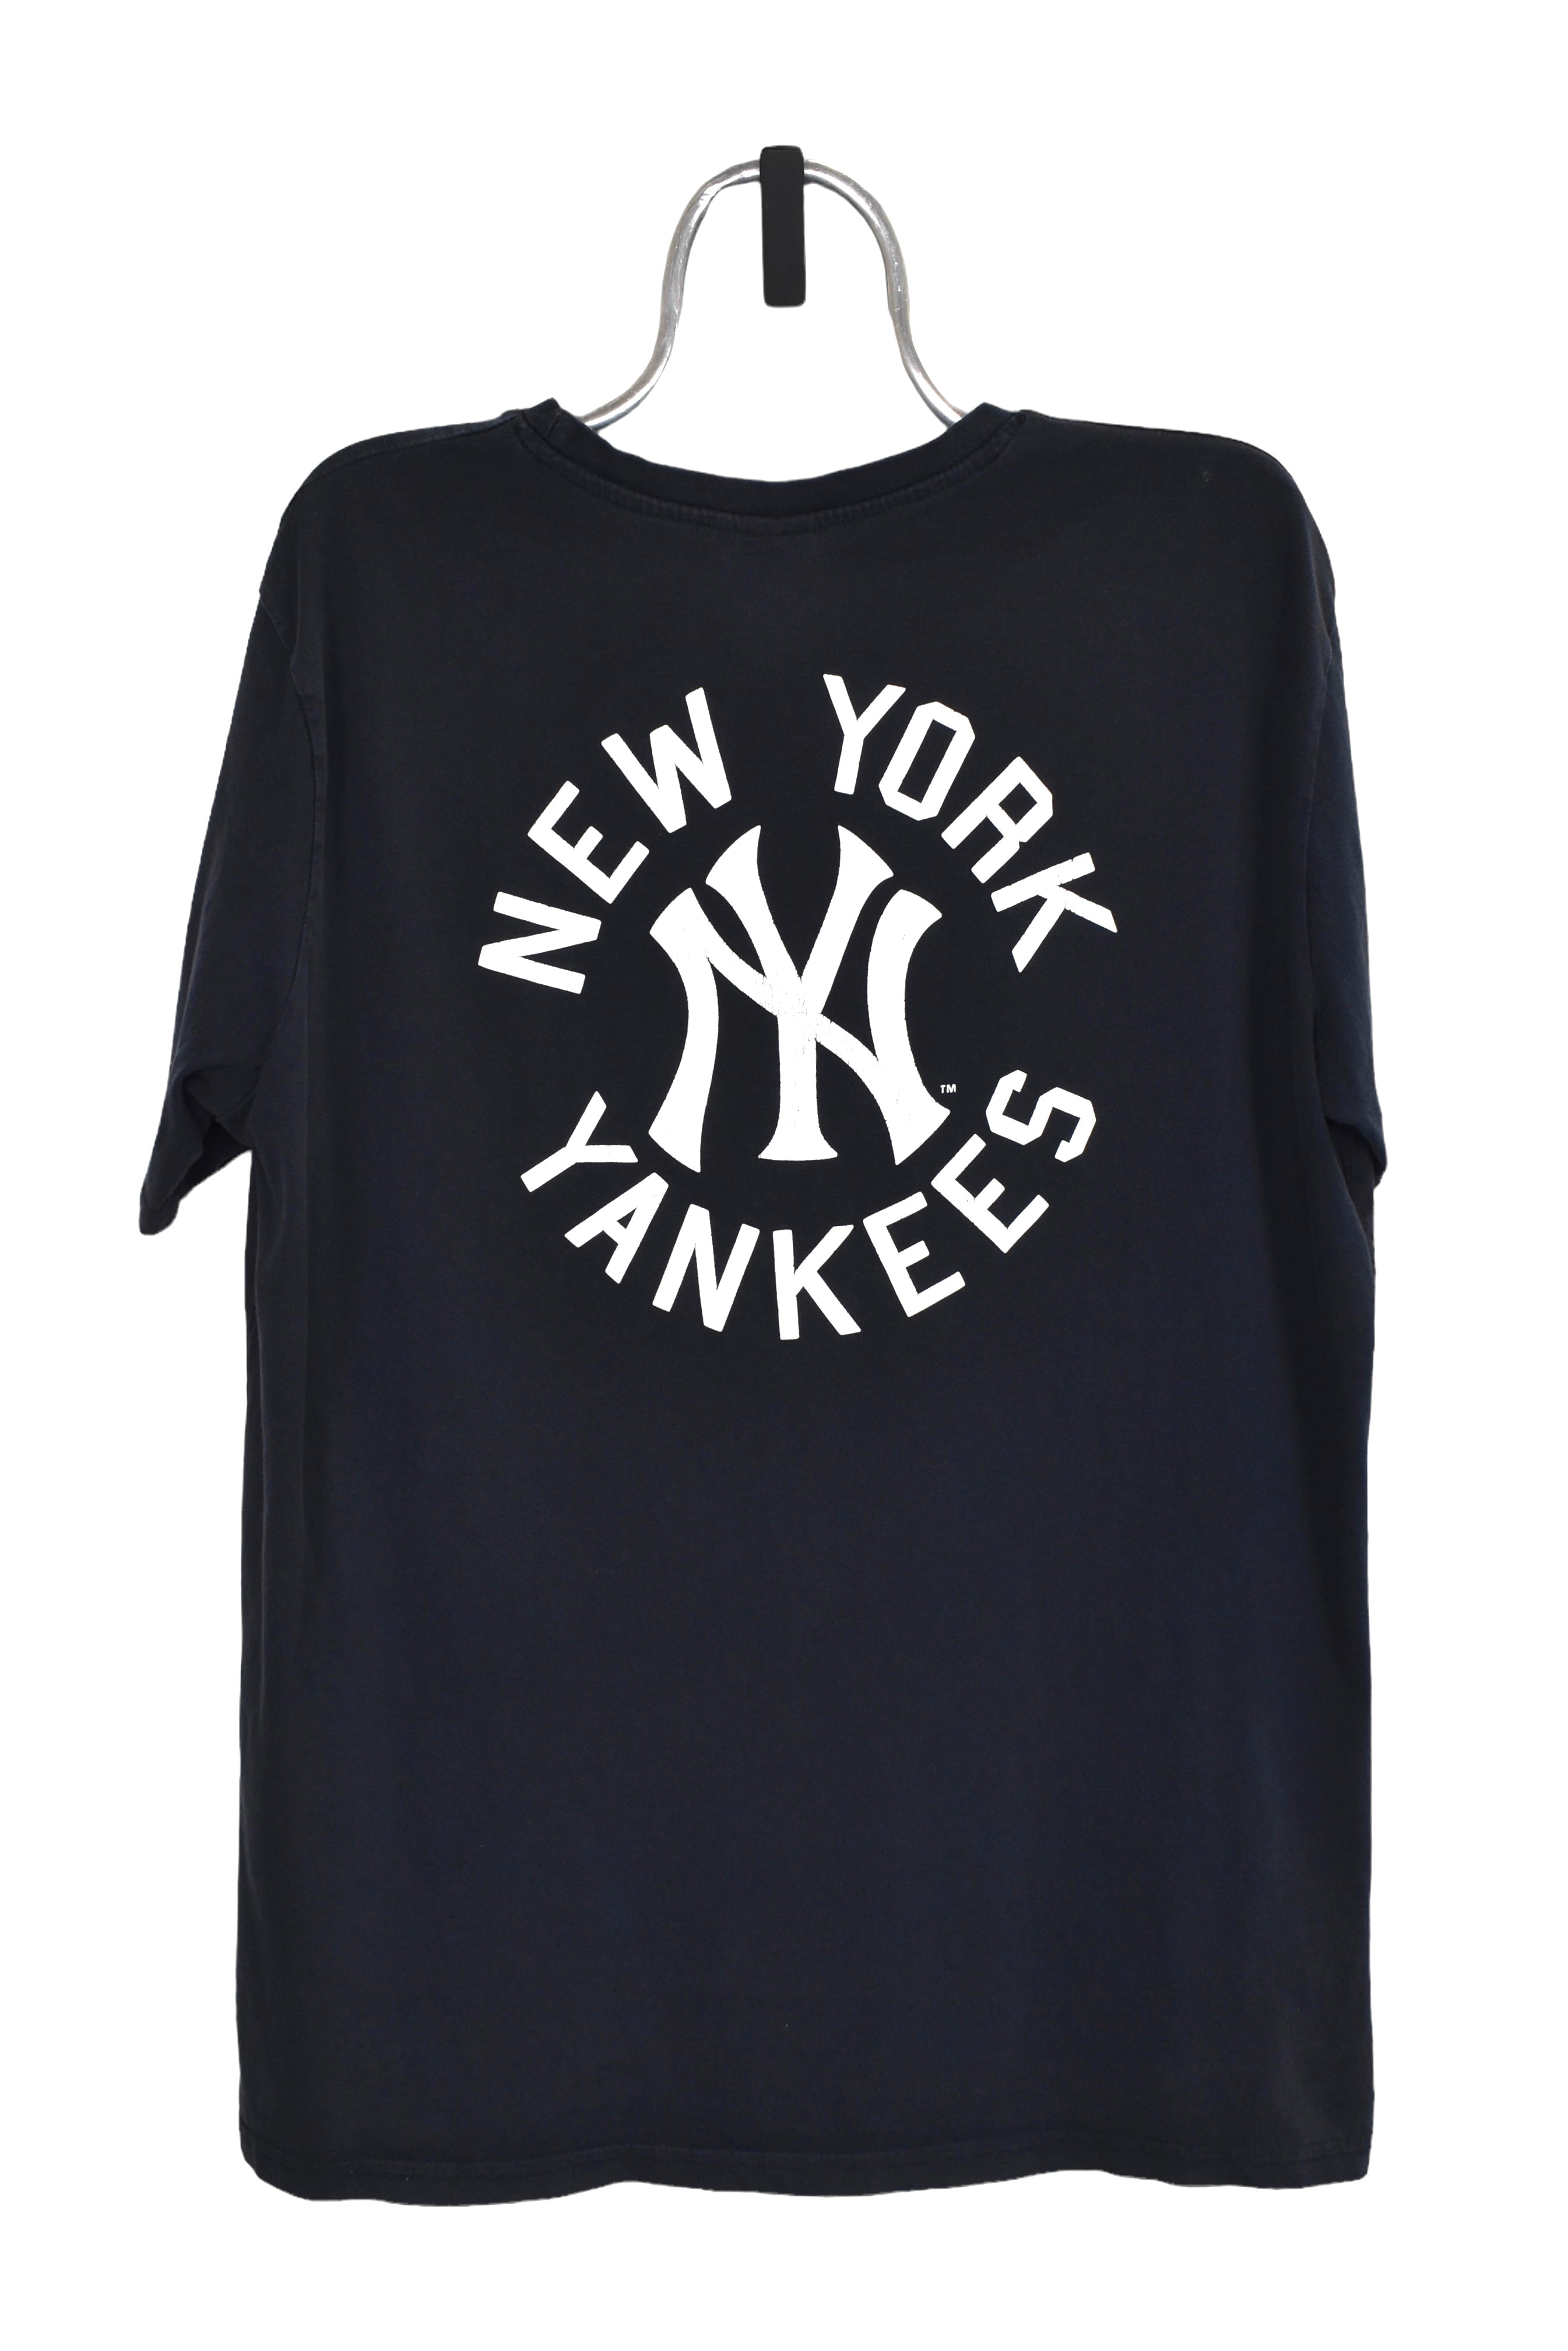 Vintage New York Yankees shirt (XL), black MLB graphic tee